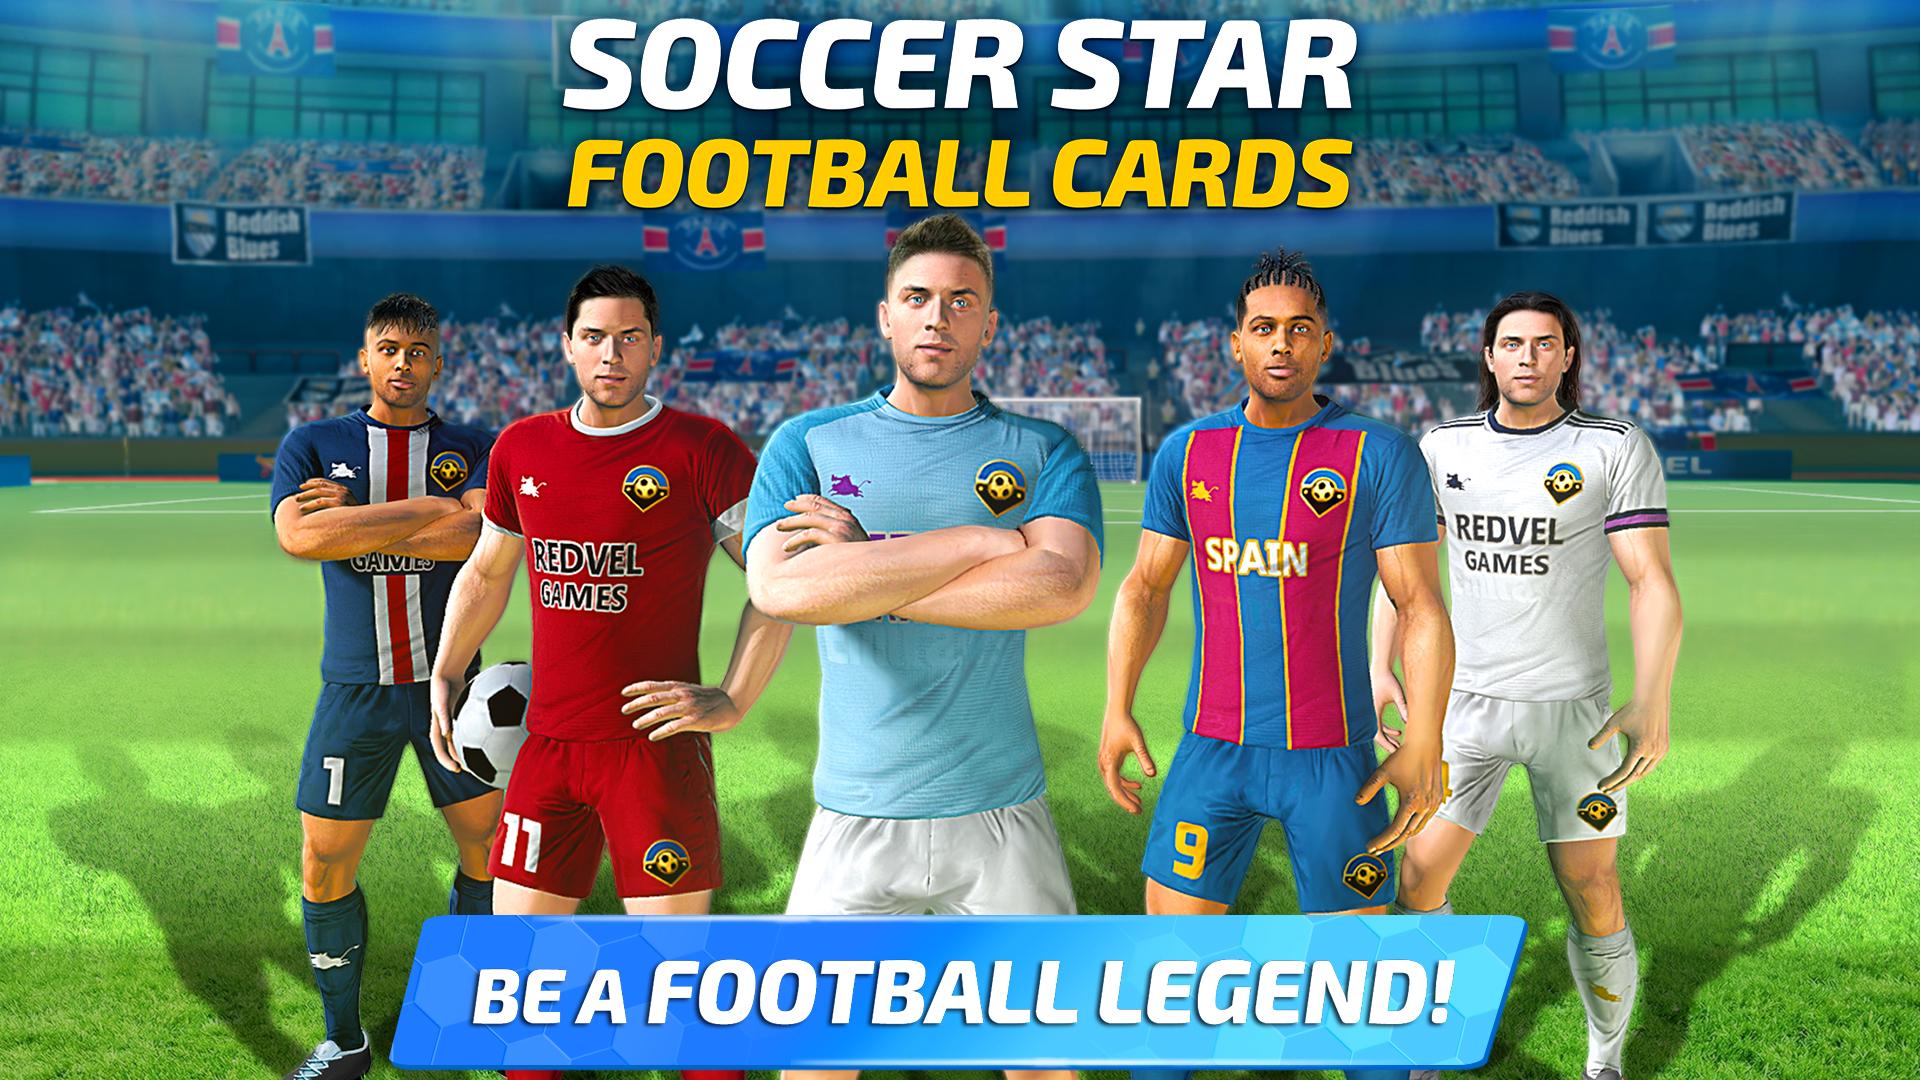 Soccer Star 2020 Football Cards: The soccer game 0.19.0 Screenshot 4